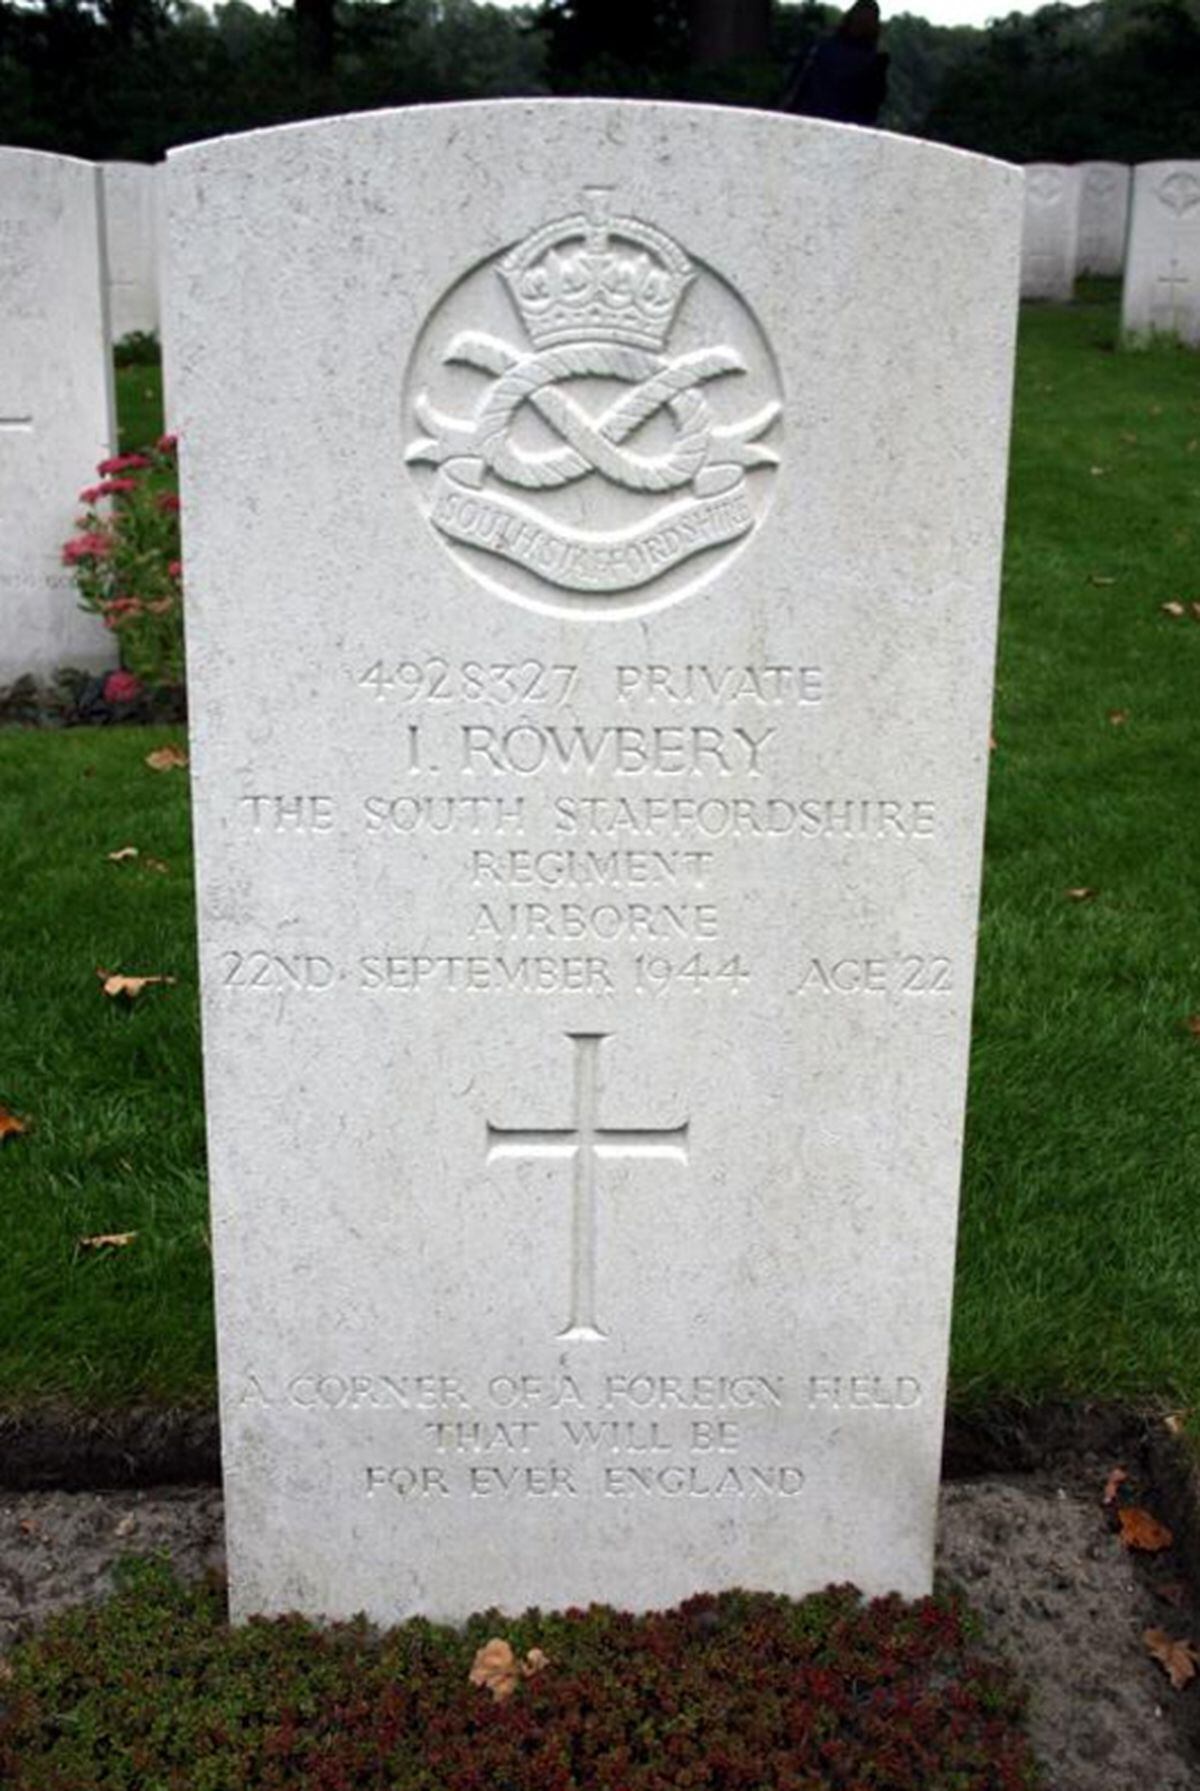 Ivor's grave